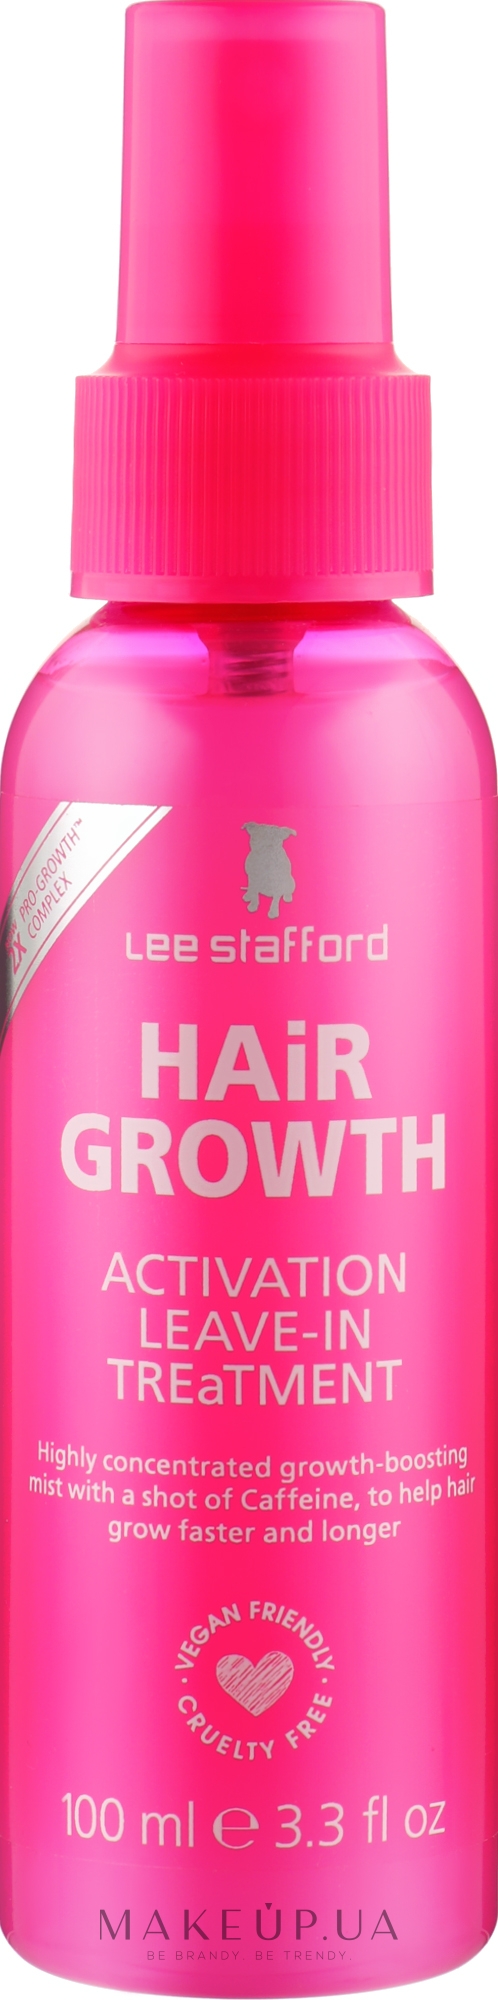 Сыворотка для усиления роста волос - Lee Stafford Hair Growth Activation Leave-In Treatment — фото 100ml